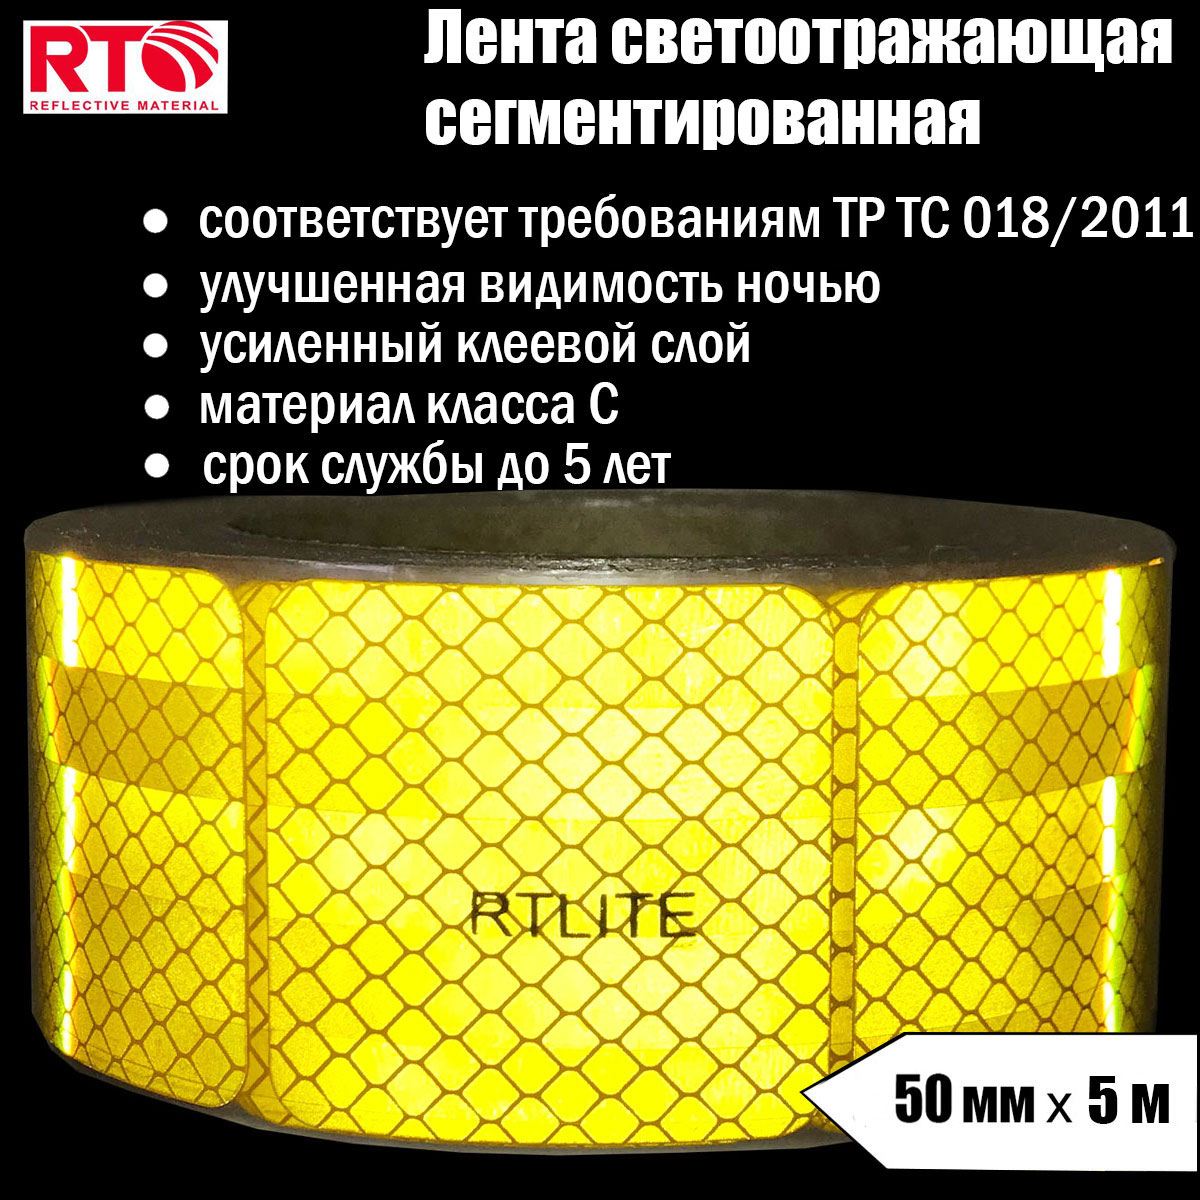 Лента светоотражающая сегментированная RTLITE RT-V104 для контурной маркировки, 50мм х 5м лента светоотражающая для контурной маркировки rtlite rt v104 50 8 мм х 50 м желтая